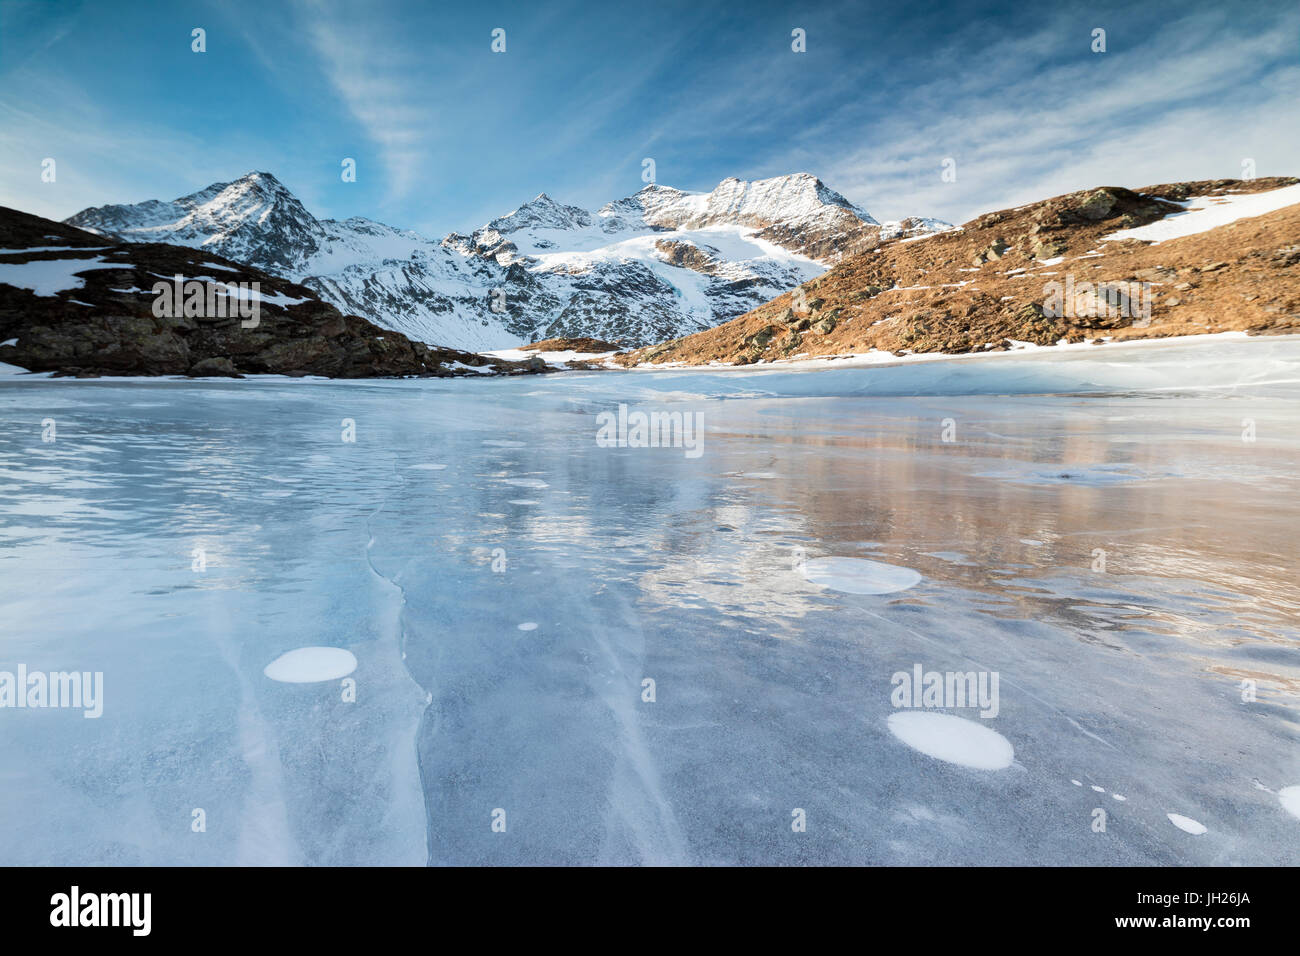 Blue sky on the frozen Lej Nair surrounded by snowy peaks, Bernina Pass, Canton of Graubunden, Engadine, Switzerland, Europe Stock Photo